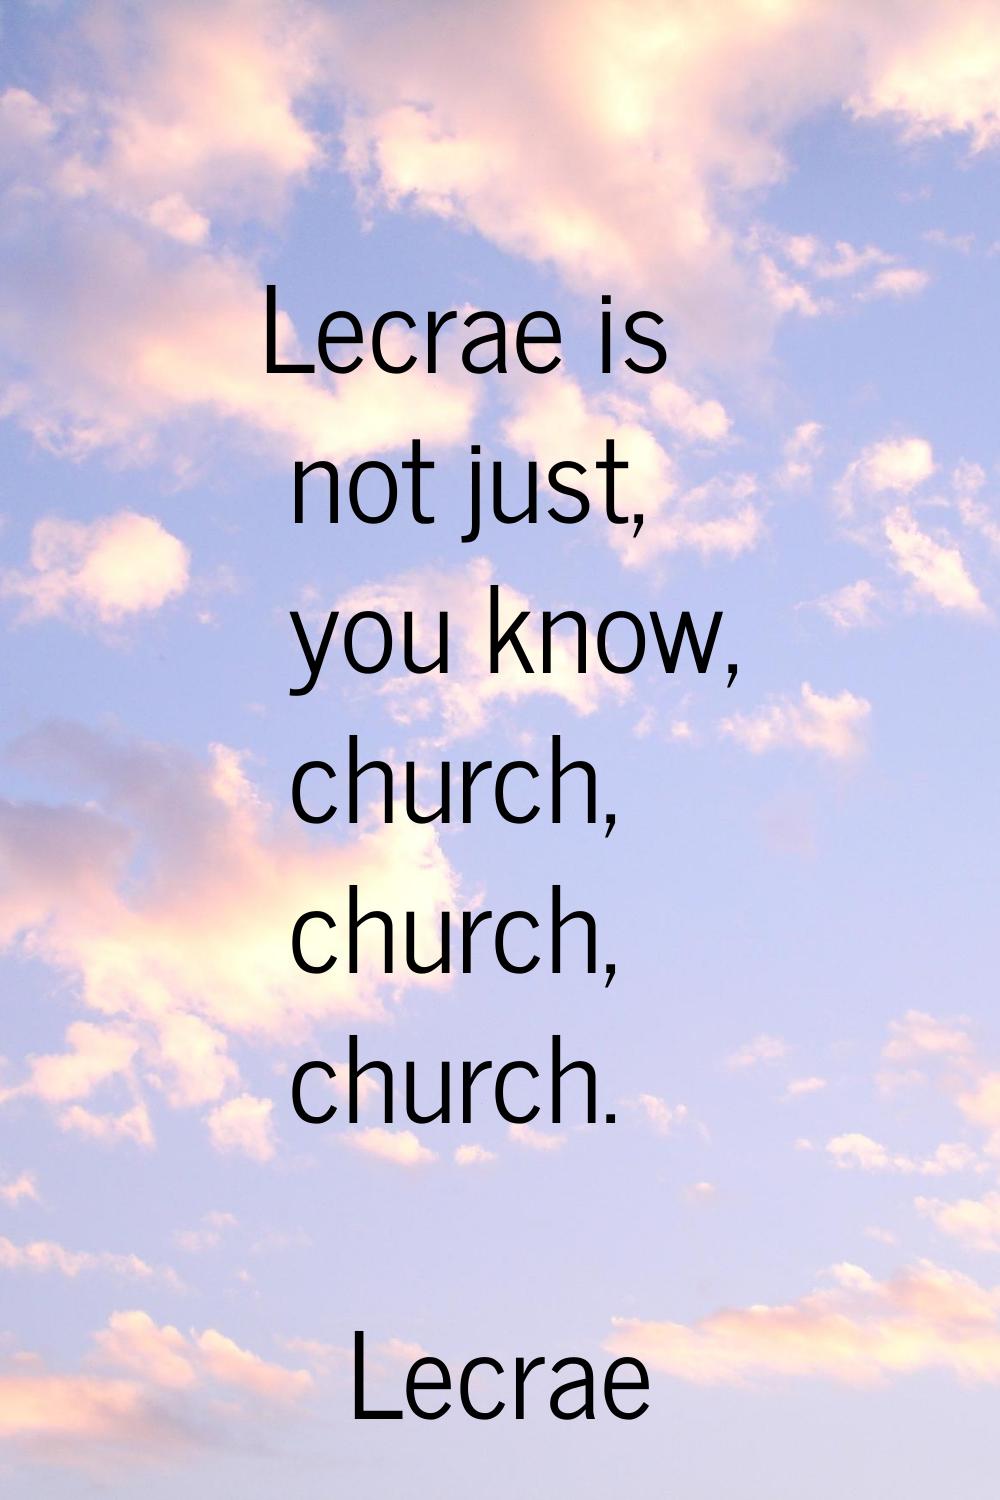 Lecrae is not just, you know, church, church, church.